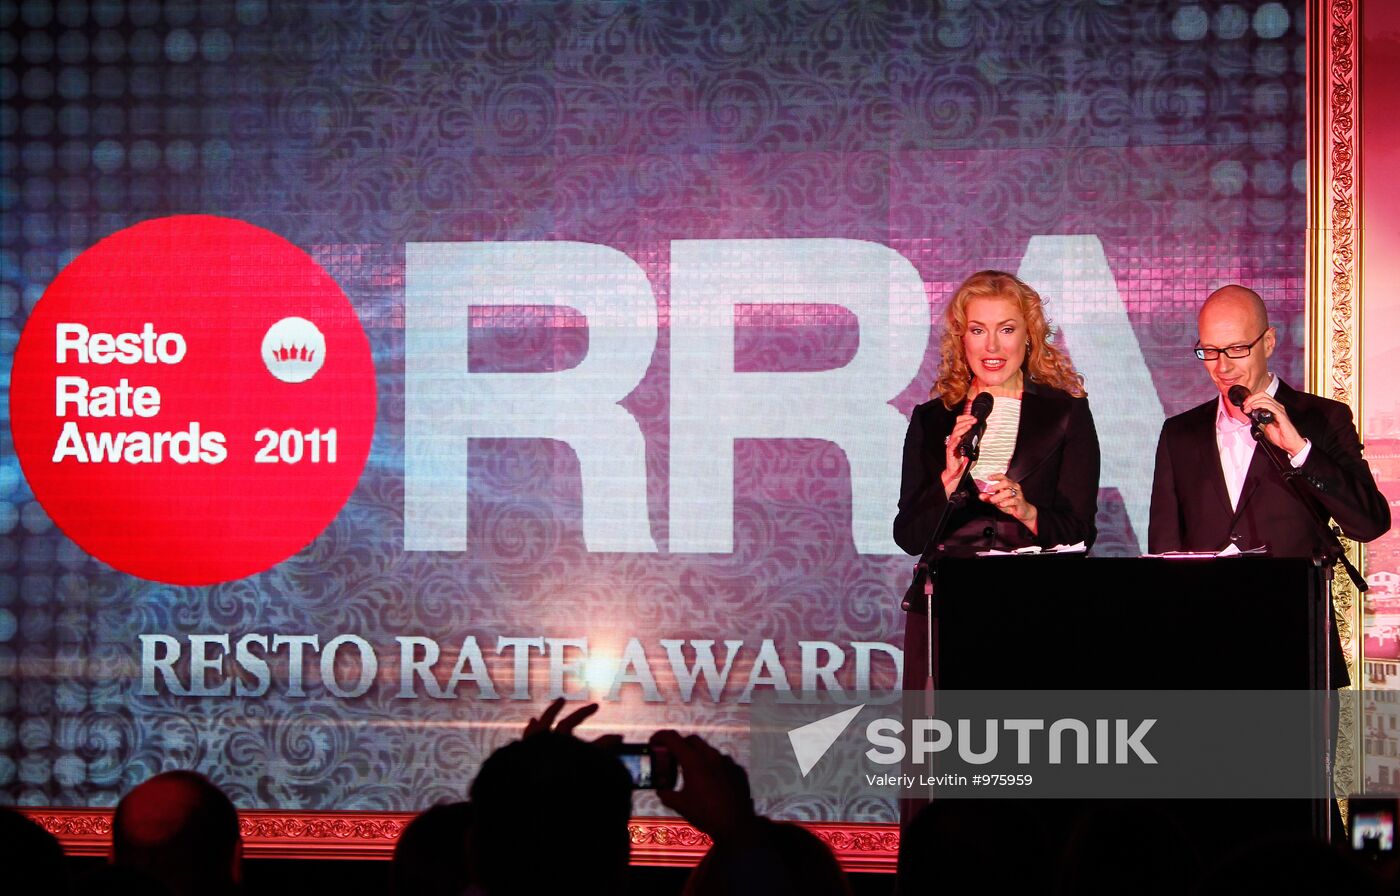 Resto Rate Awards 2011